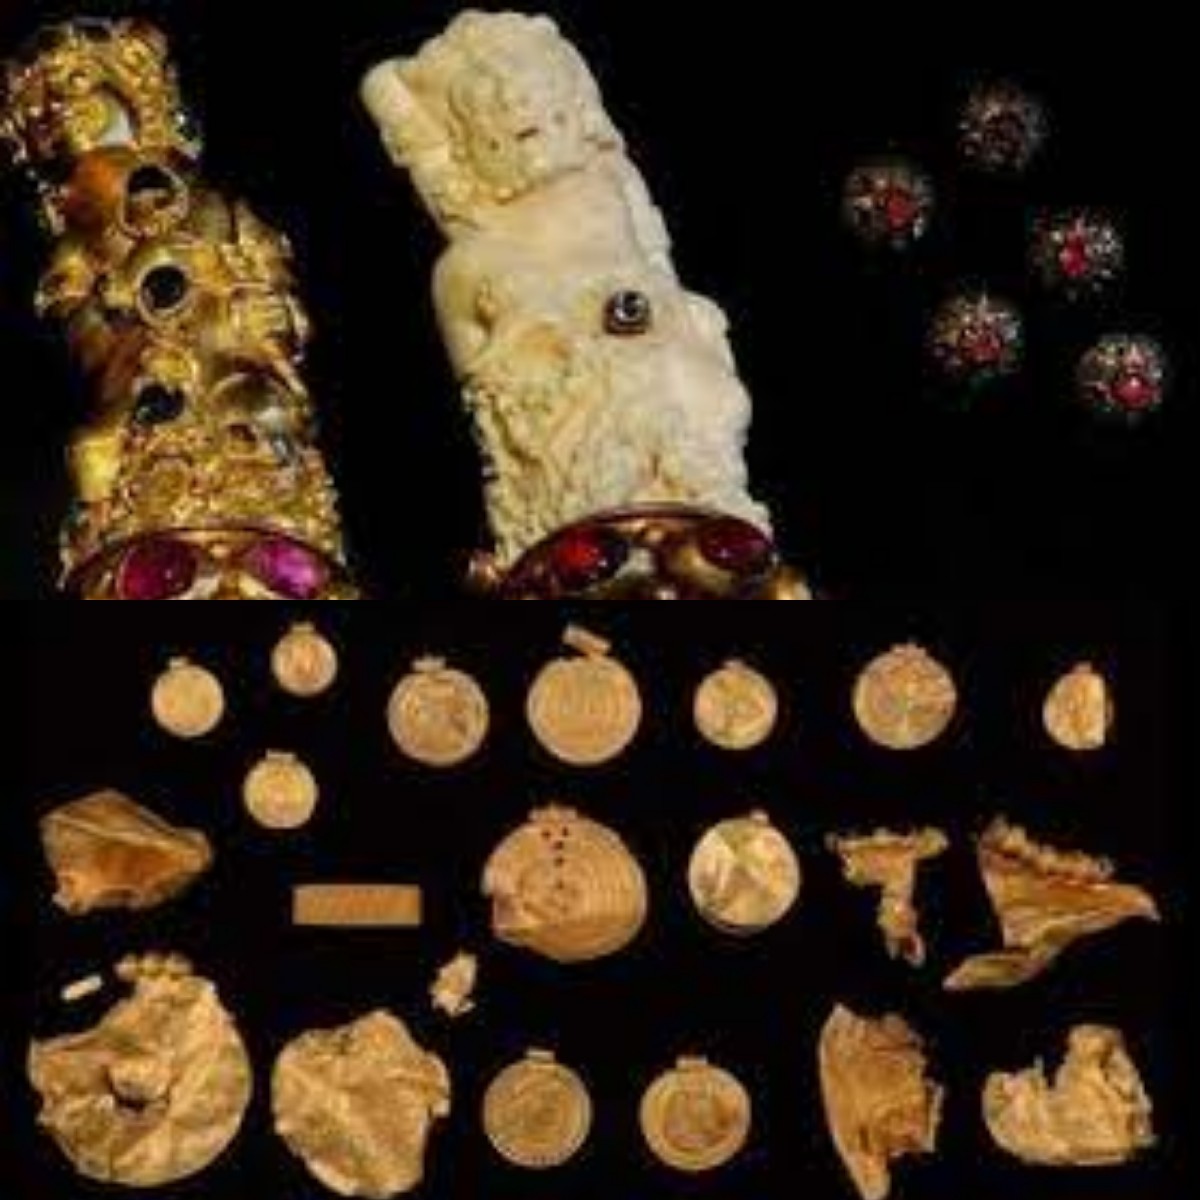 Mengulik Misteri dan Sejarah Tara Emas: Artefak Berharga yang Ditemukan di Filipana